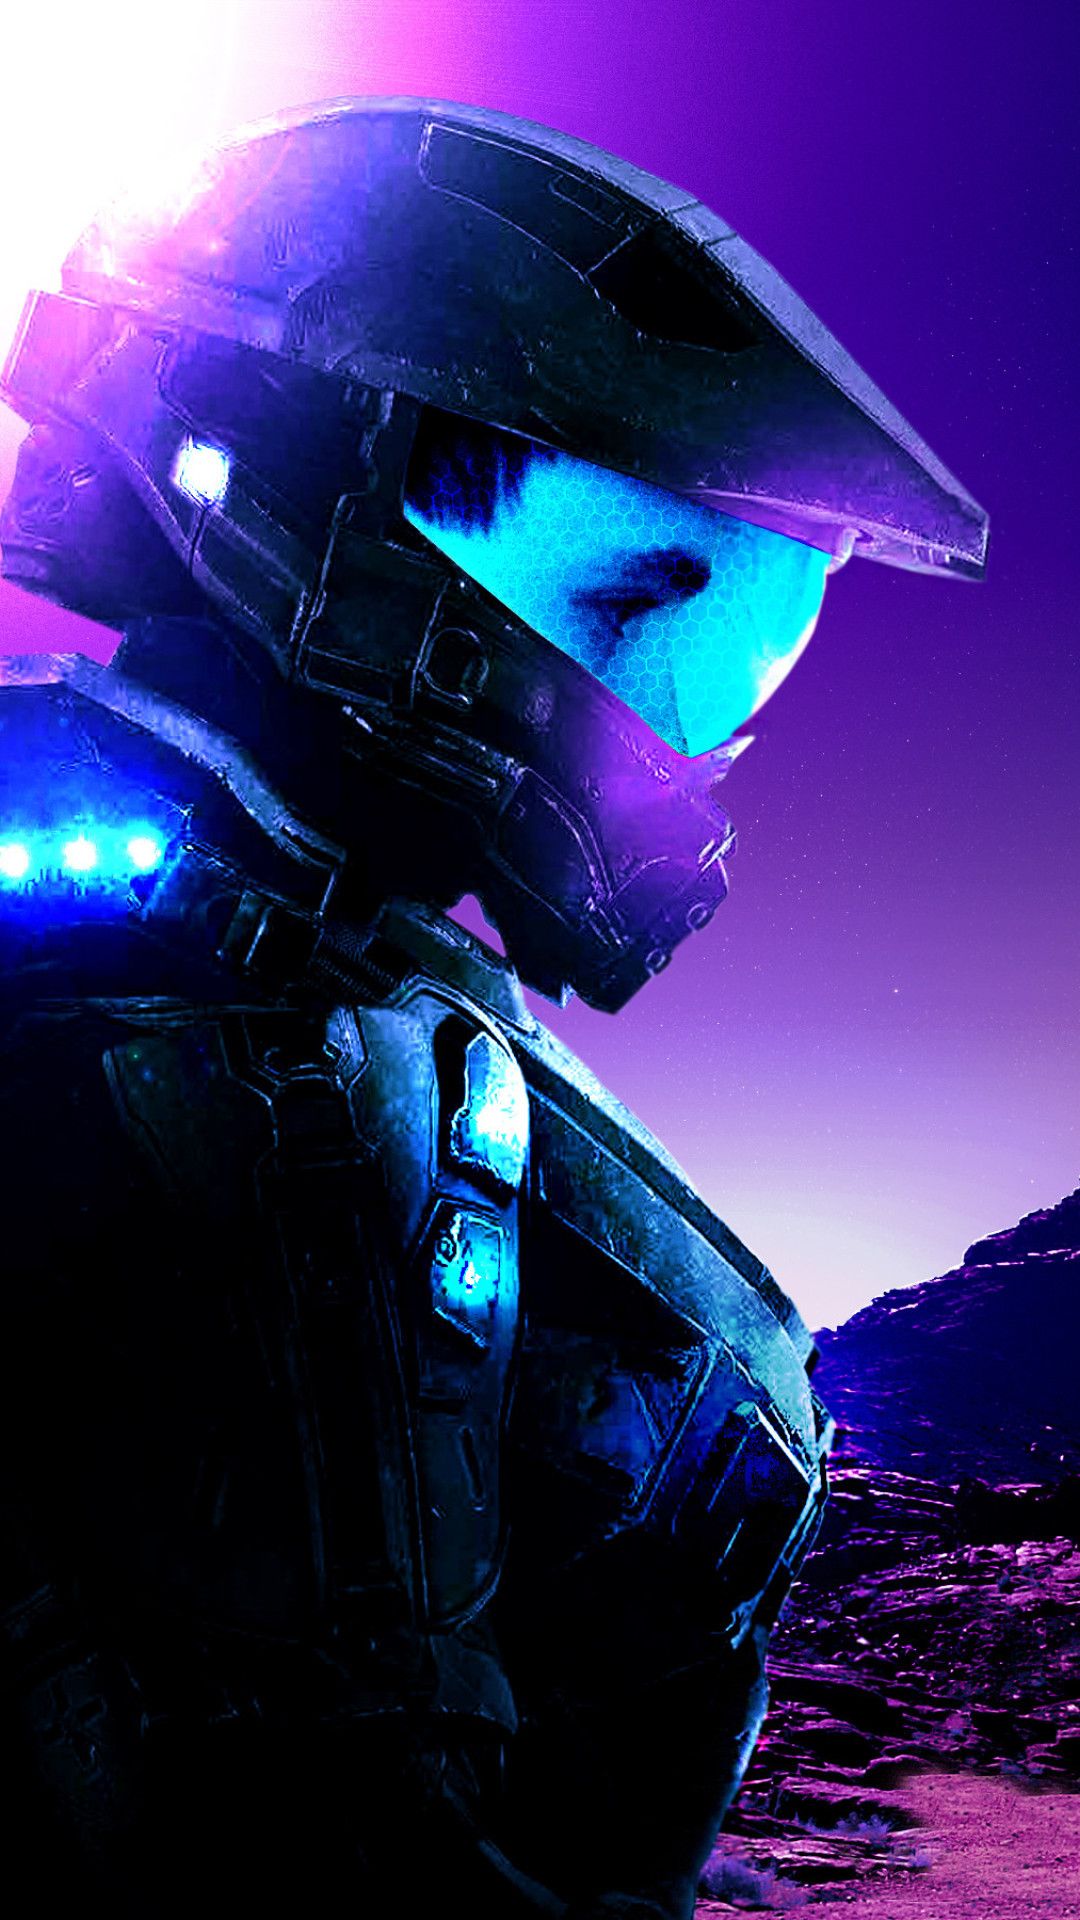 Retro Halo Space Suit Scifi 4k iPhone 6s, 6 Plus, Pixel